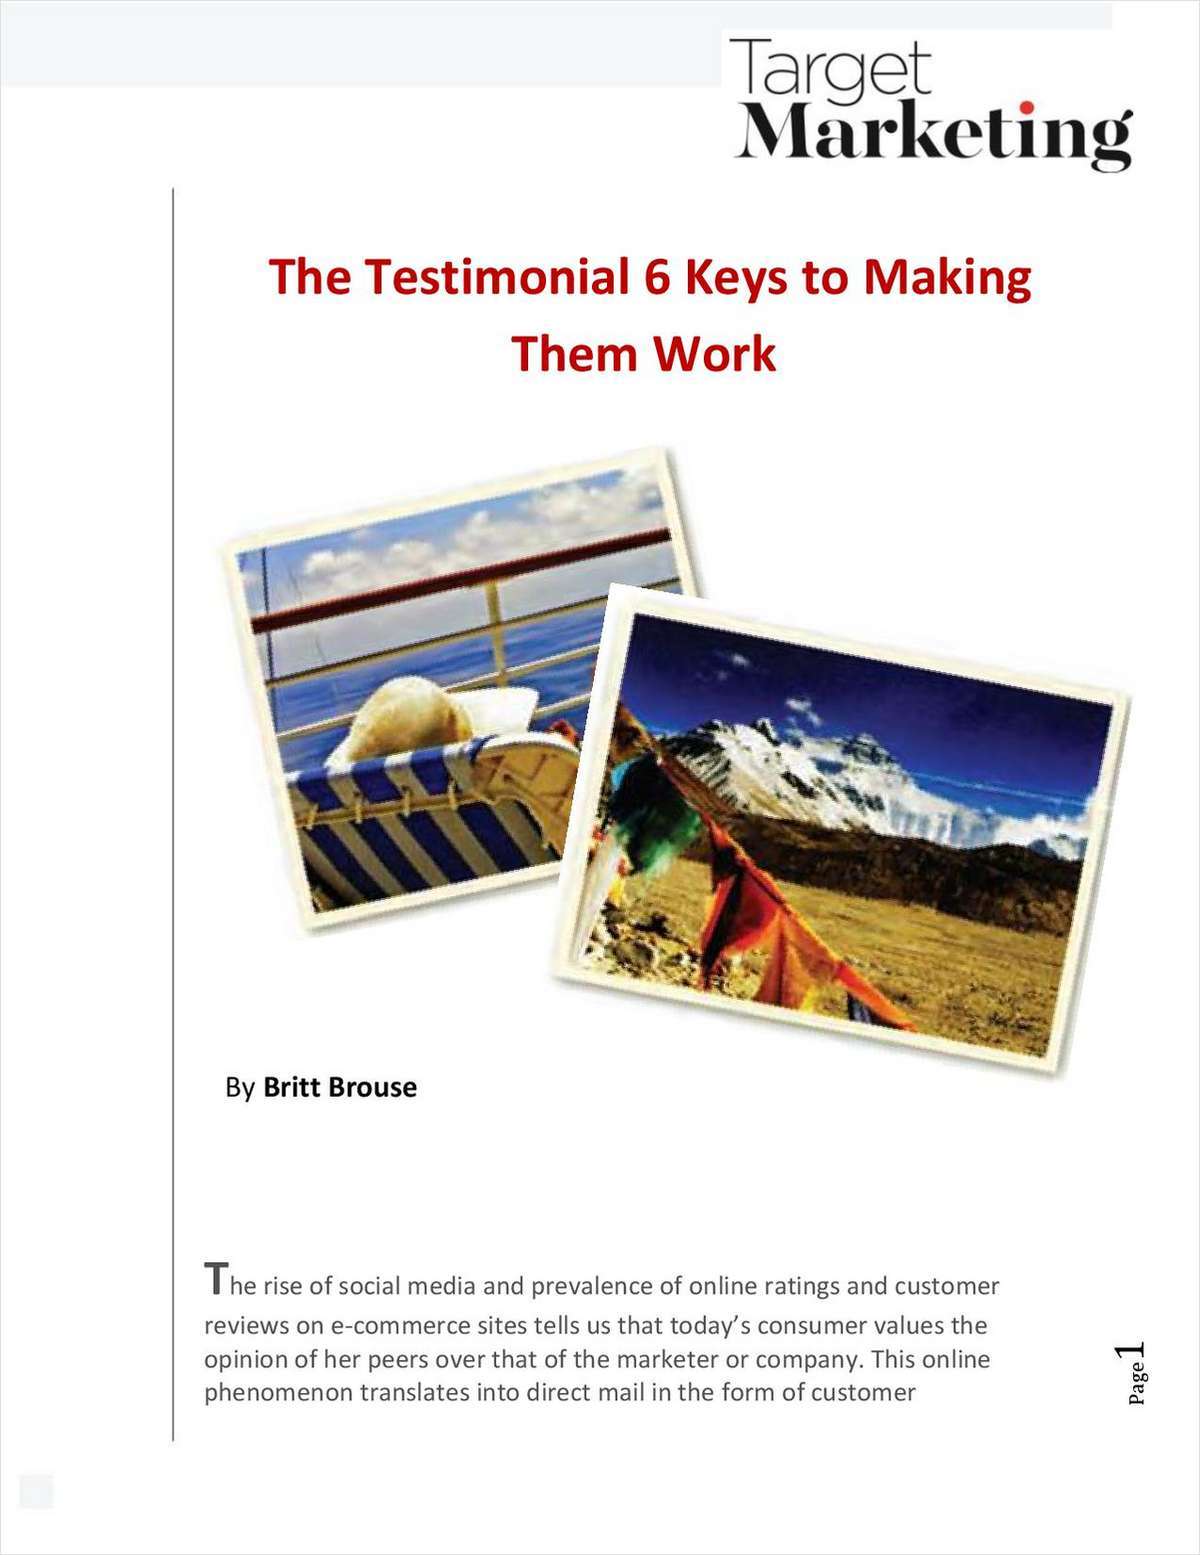 The Testimonial: 6 Keys to Making Them Work